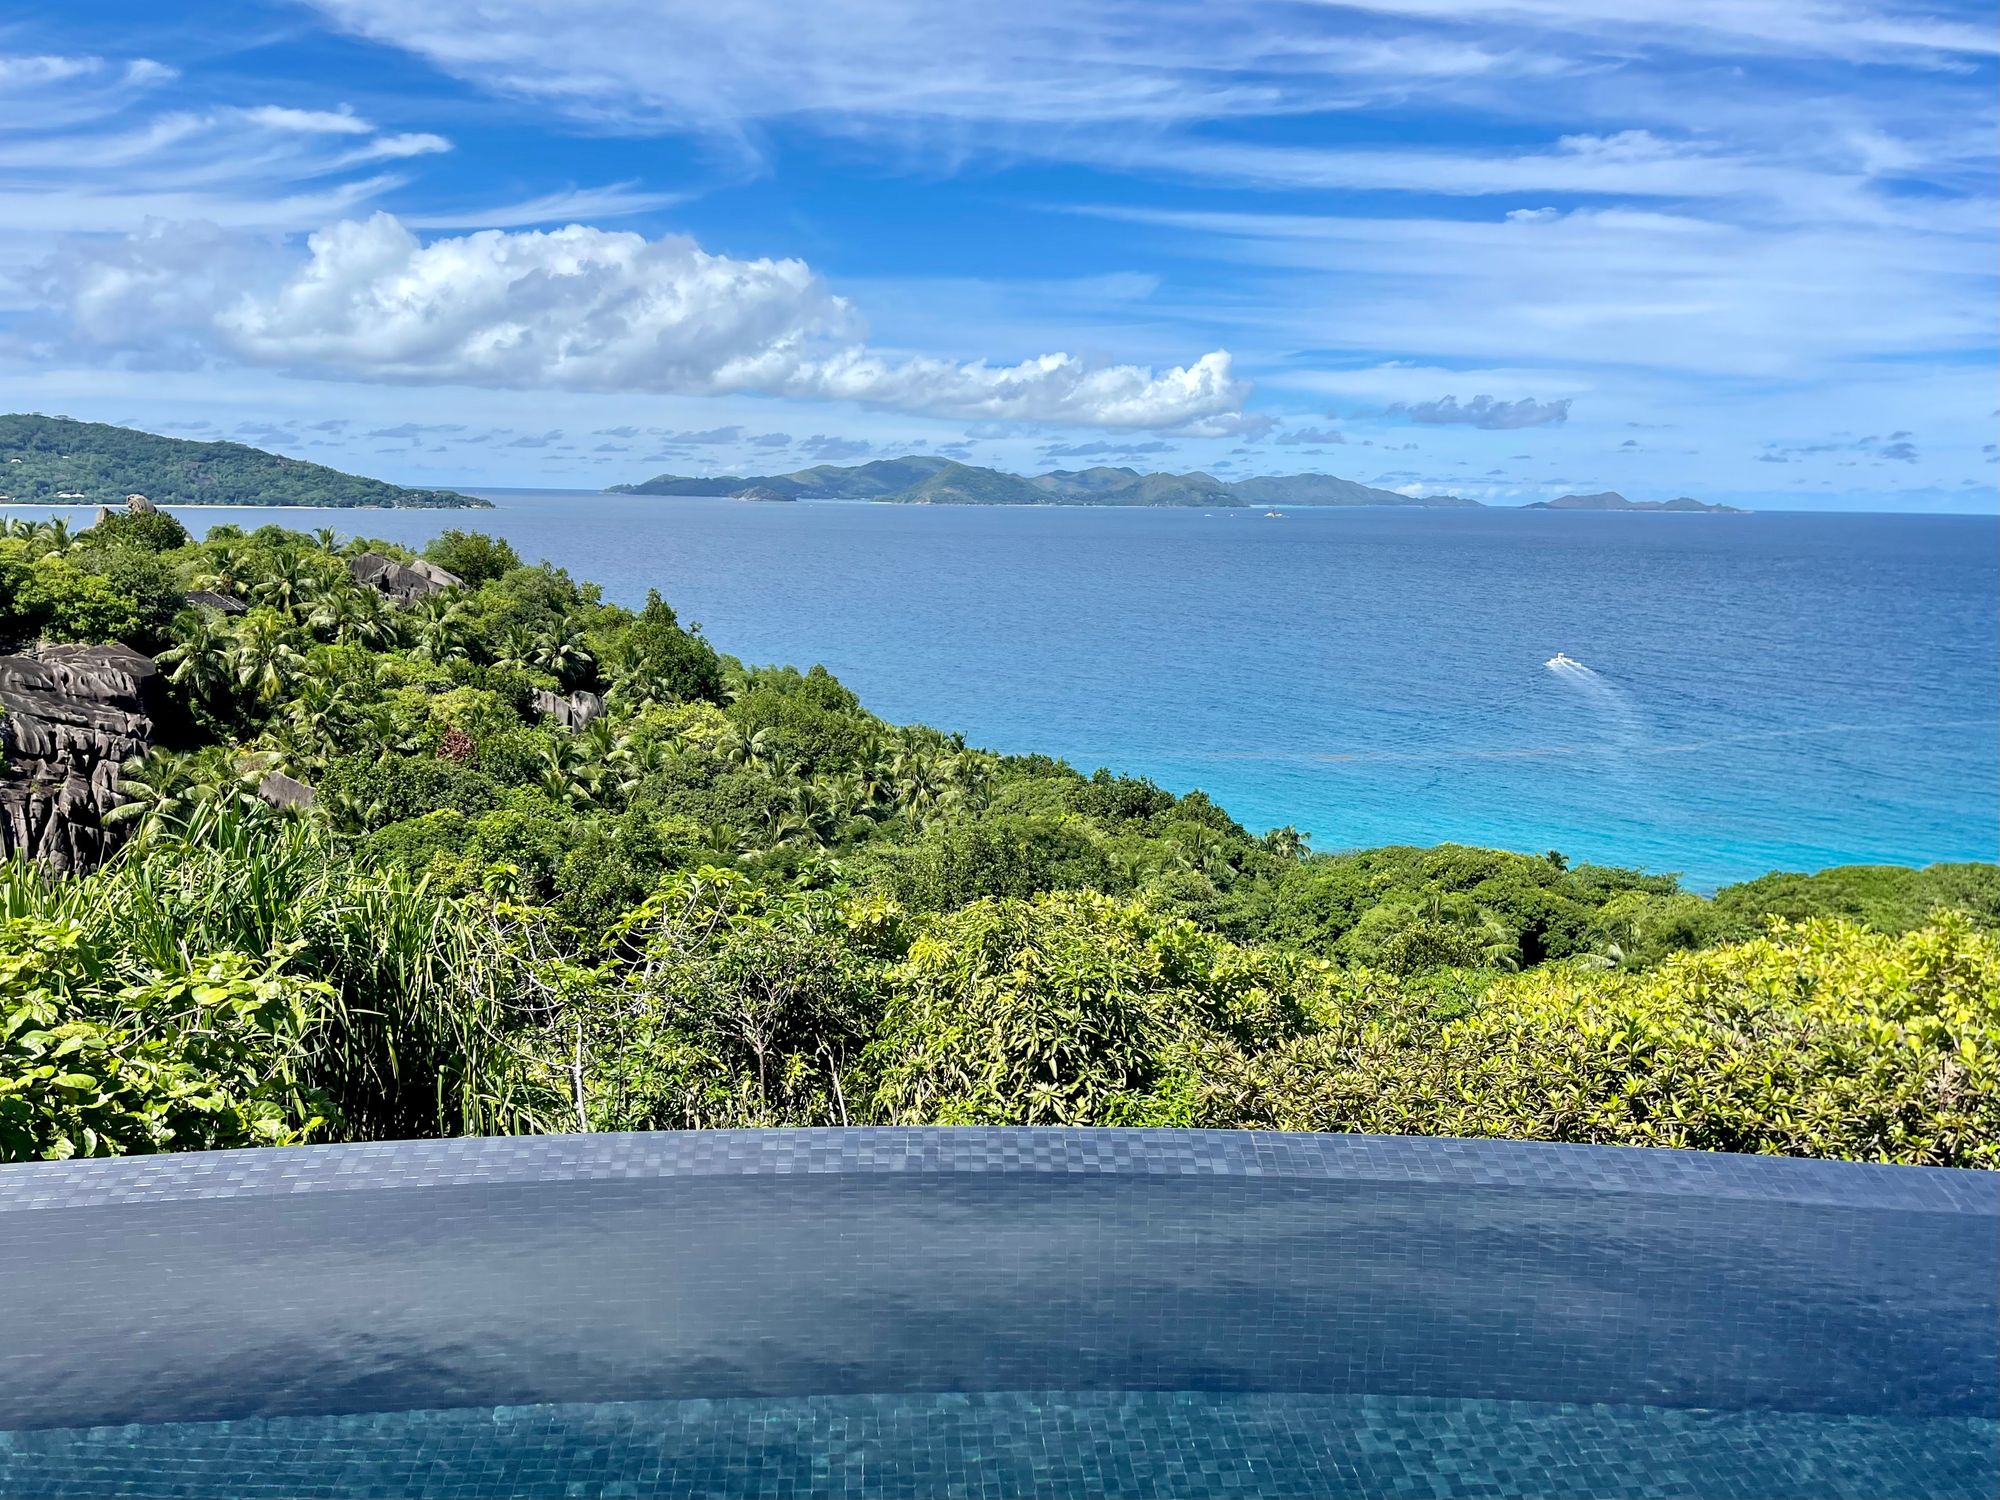 Six Senses Resort Seychelles - Review - Seascape Residence